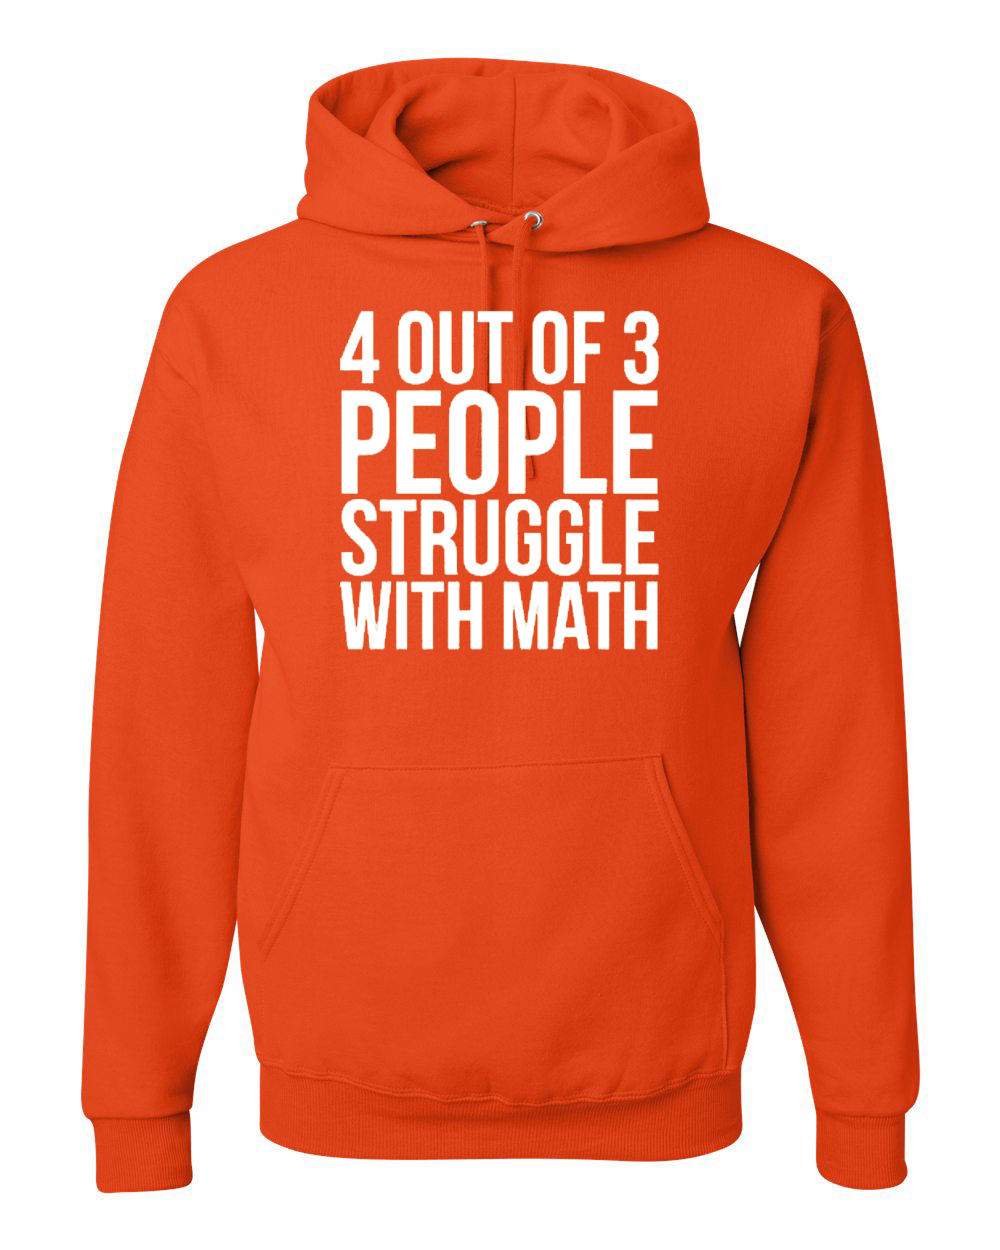 4 Out of 3 People Struggle with Math Joke Humor Unisex Graphic Hoodie Sweatshirt, Orange, 2XL - image 1 of 3